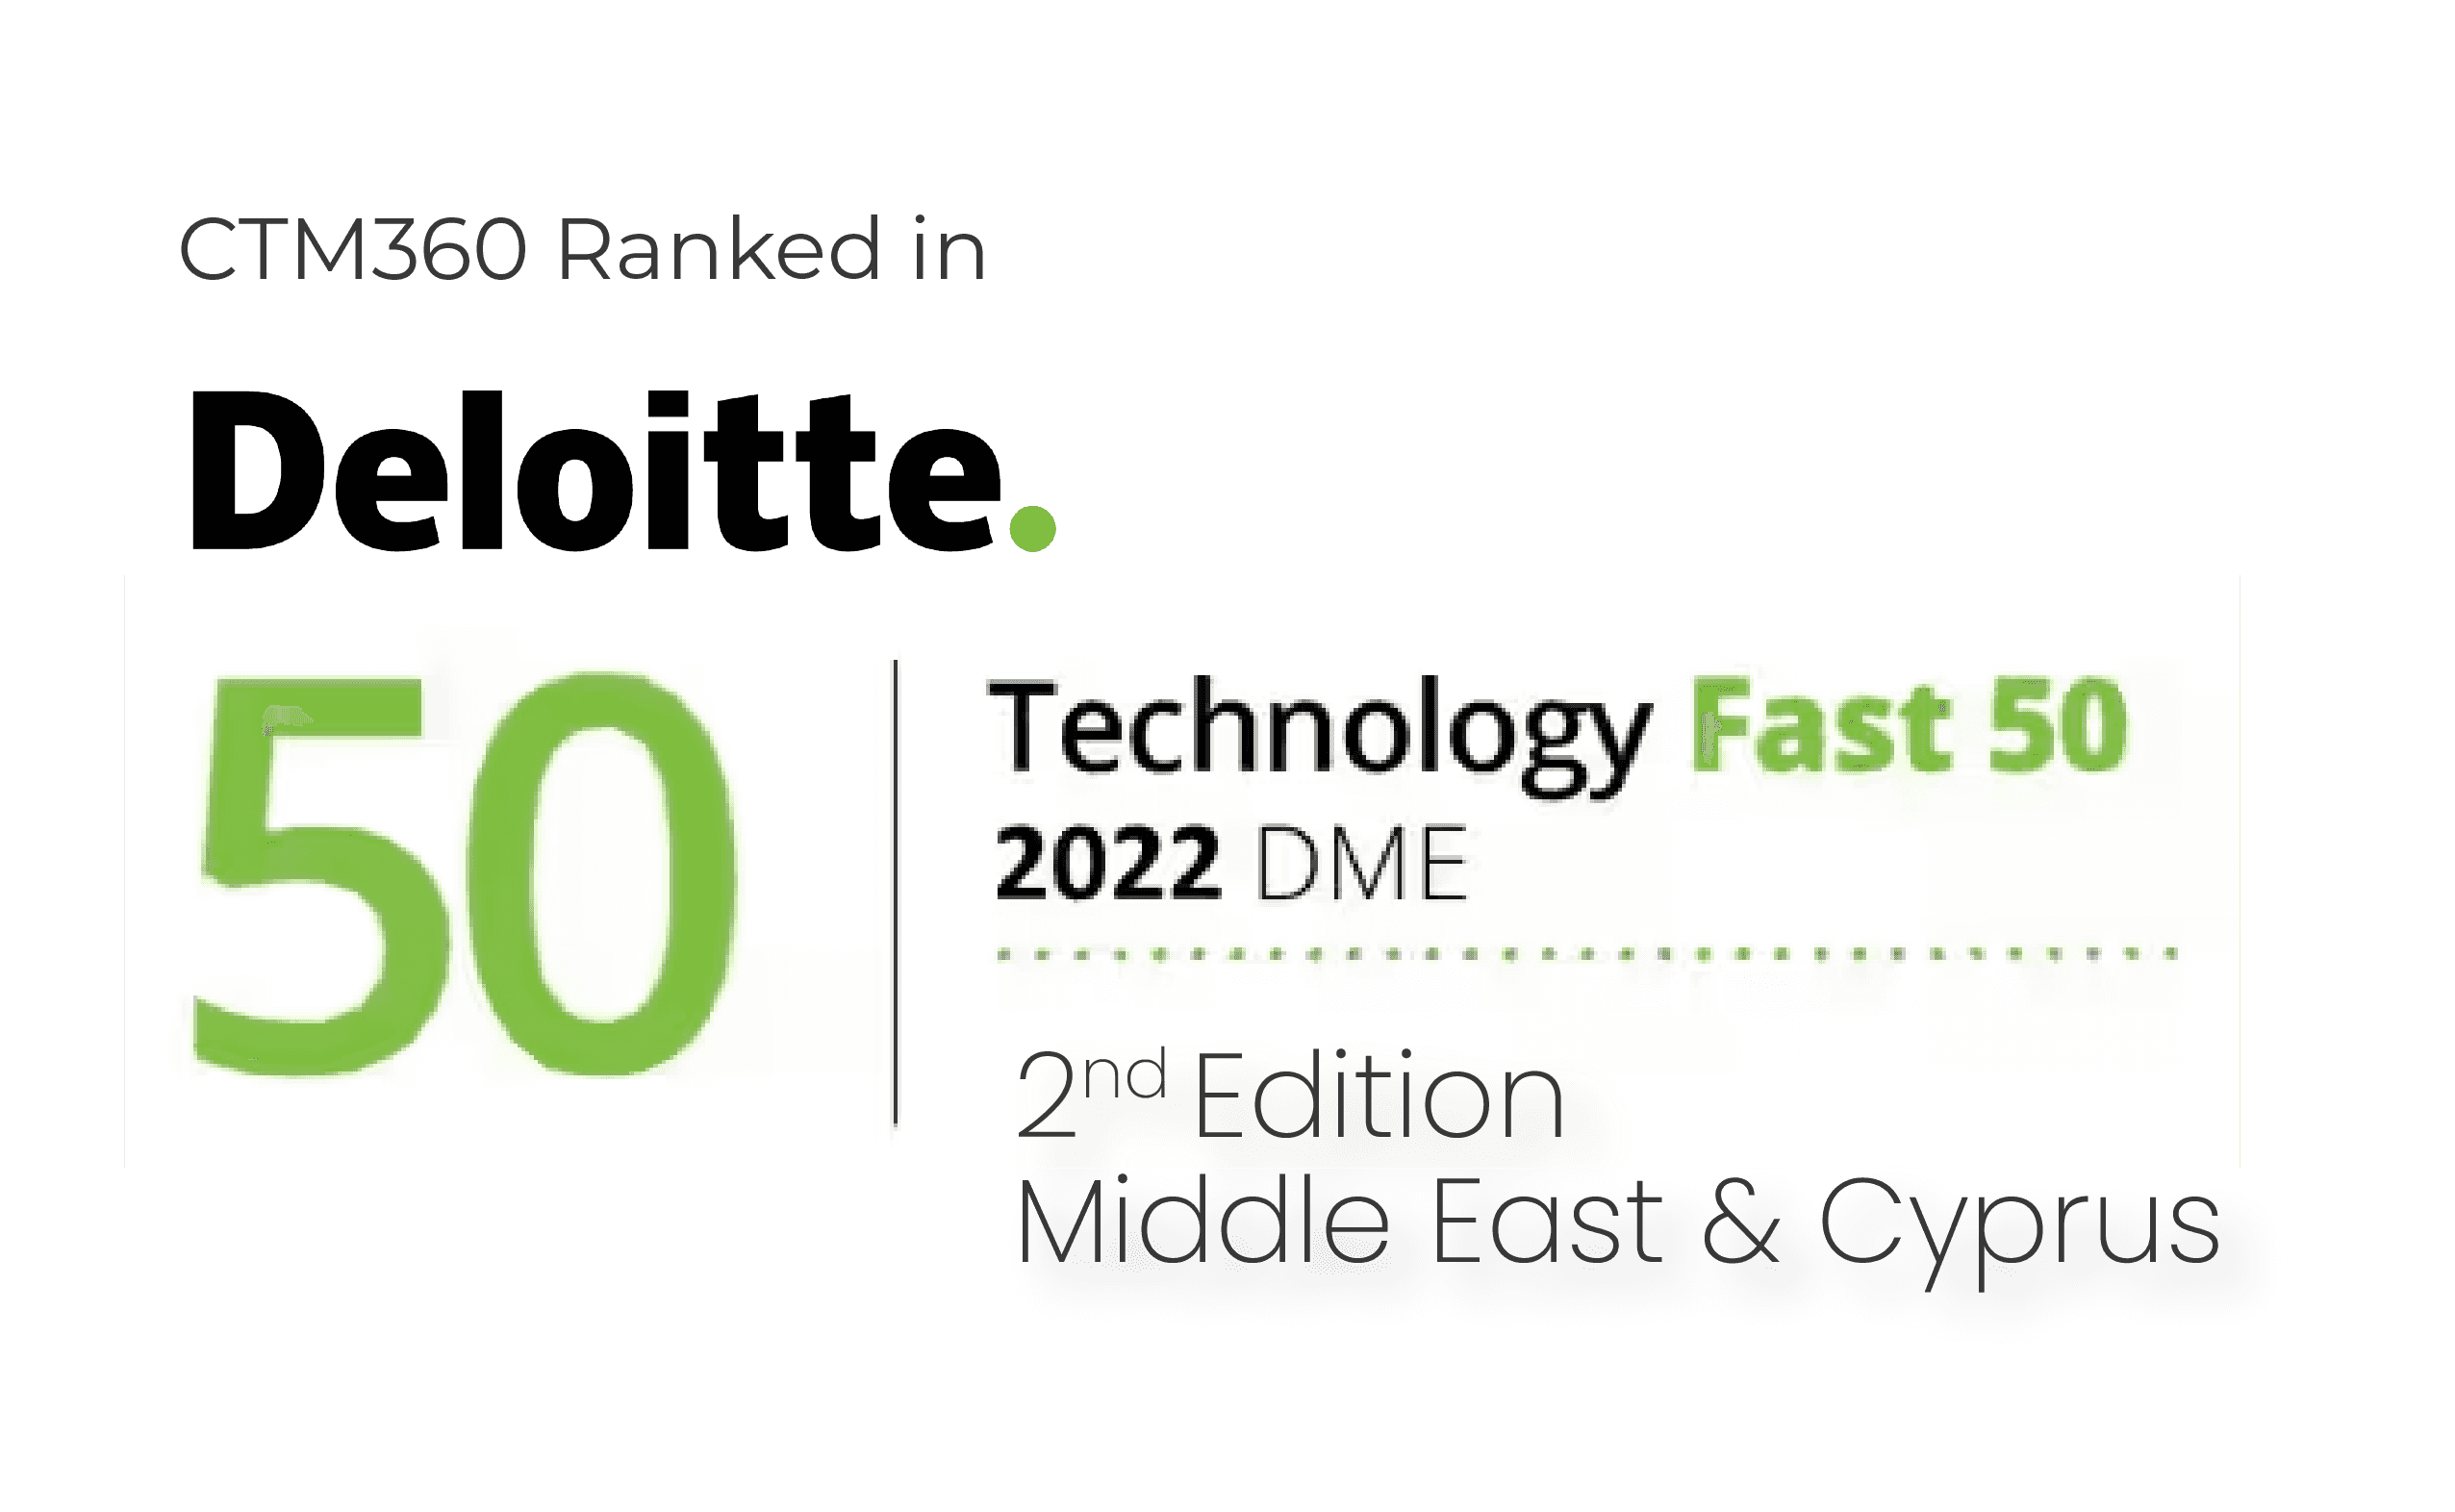 CTM360 ranked in Deloitte Fast 50 TECHNOLOGY 2022 DME